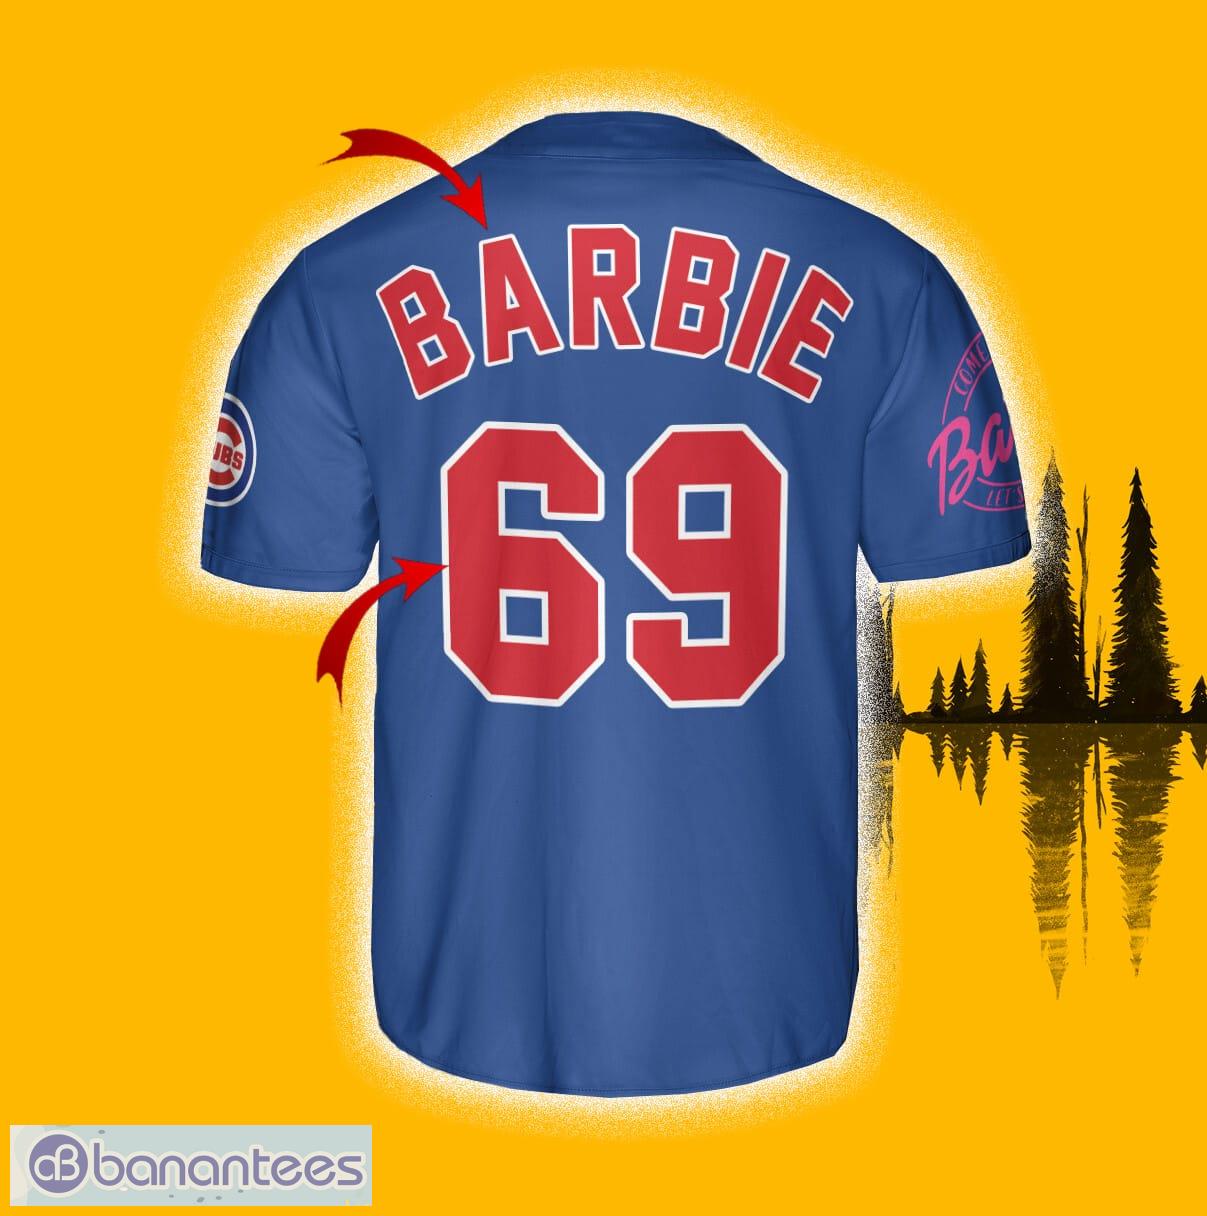 Barbie Chicago Cubs Baseball Jersey - Ethershirt